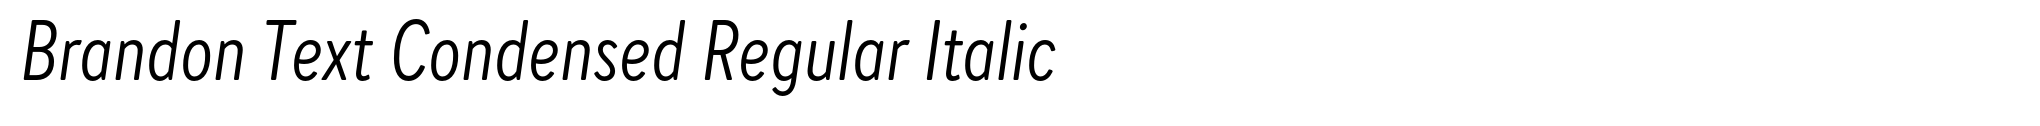 Brandon Text Condensed Regular Italic image